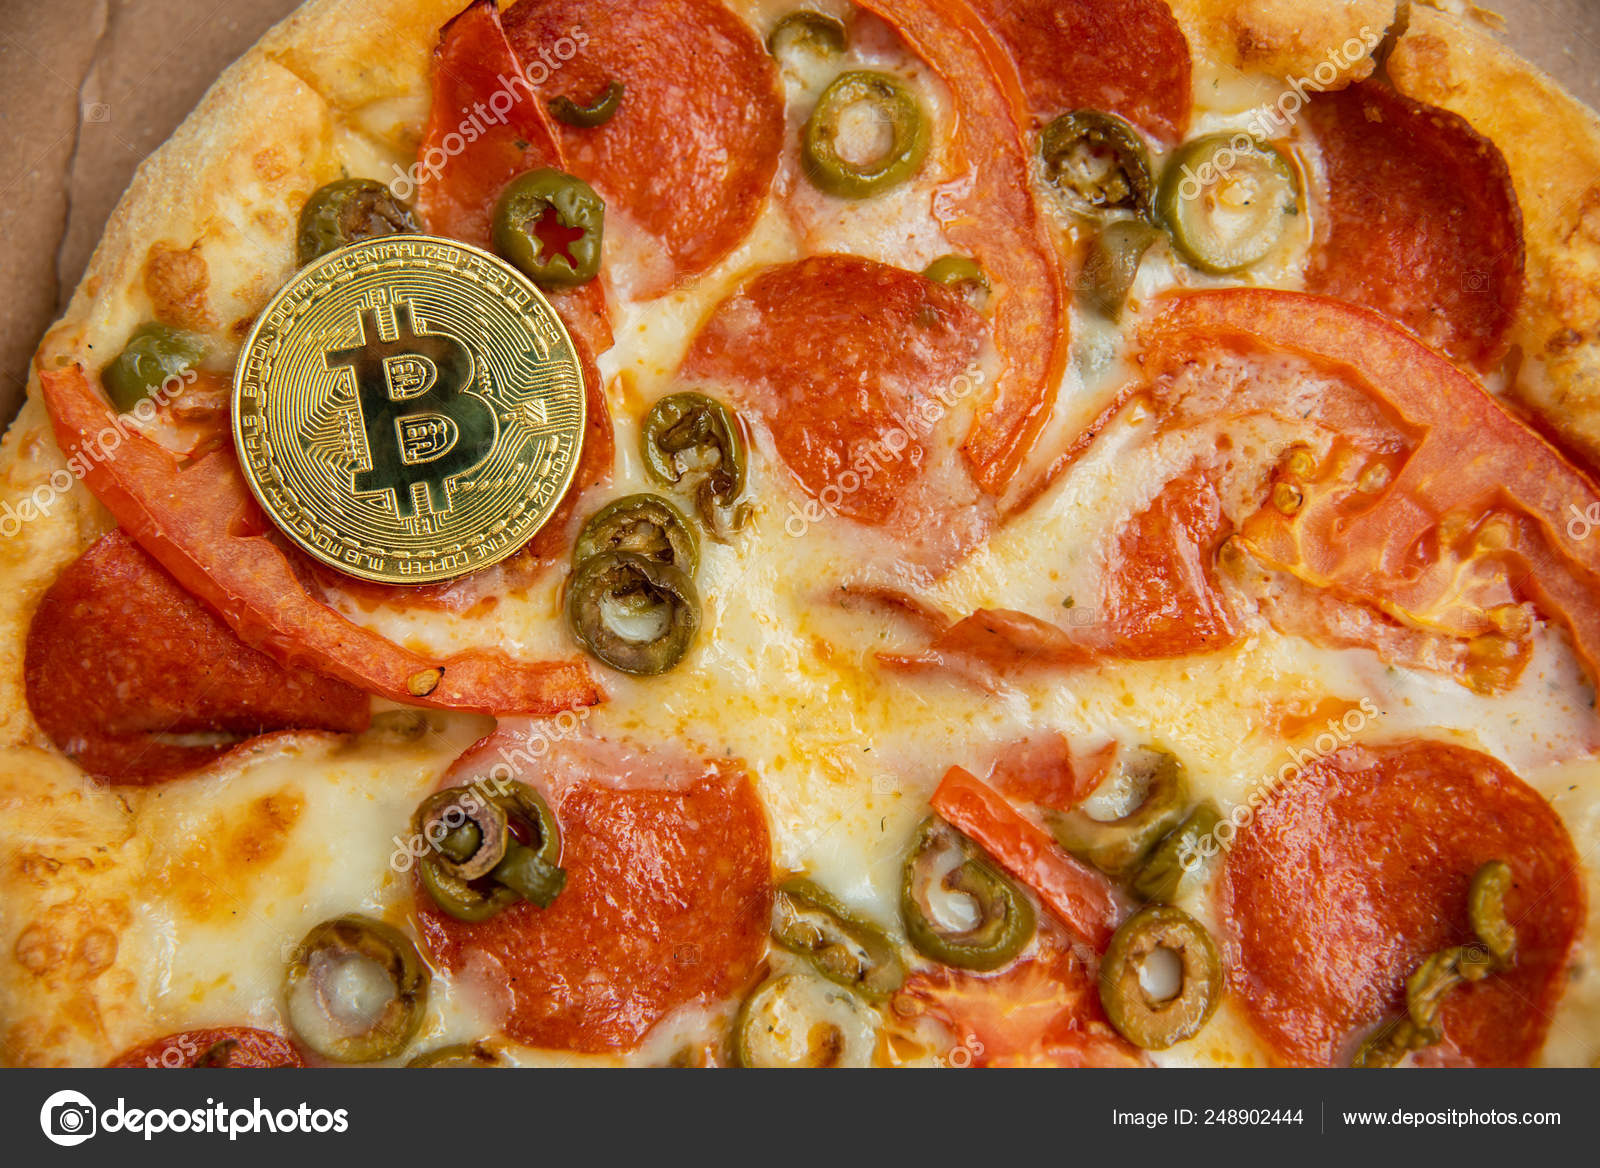 bitcoin buying 2 pizza